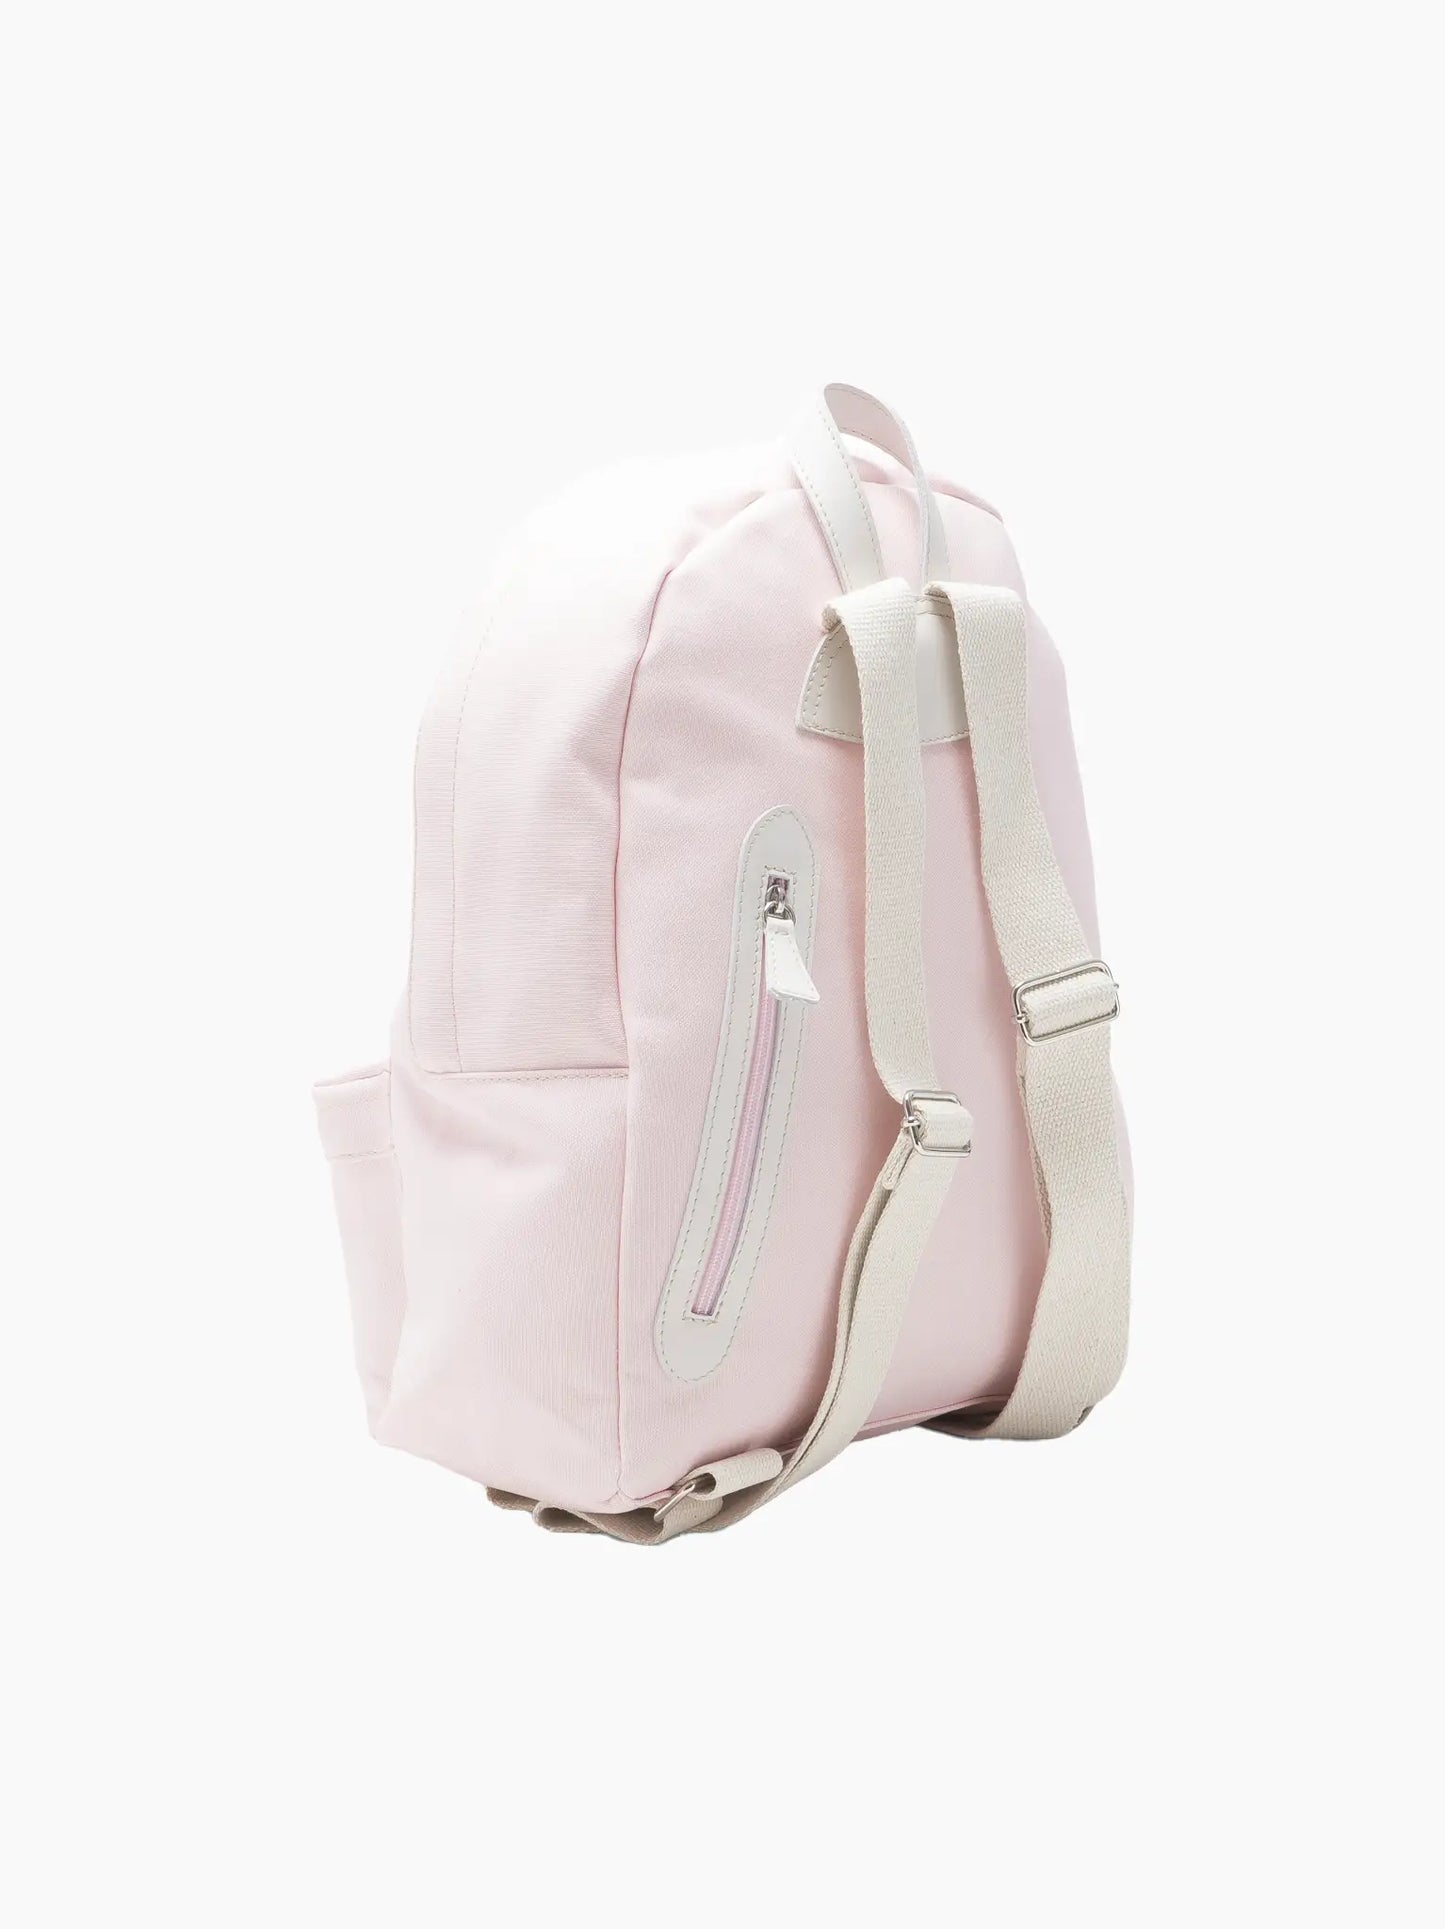 Personalised Childrens Backpack